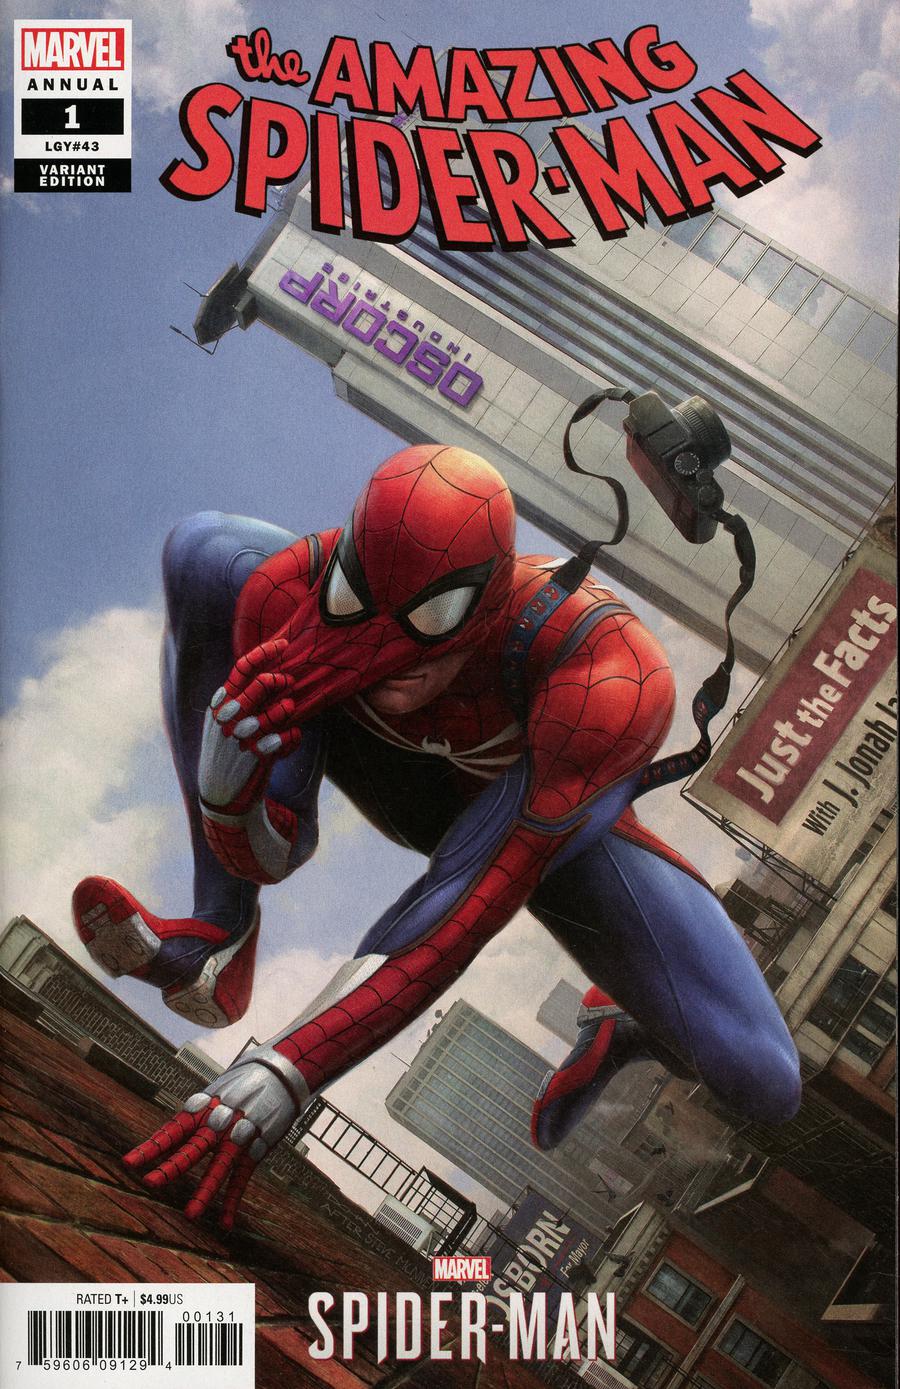 Amazing Spider-Man Vol.5 Annual #1 (LGY #43) 1:10 Ratio Variant Edition [2018]